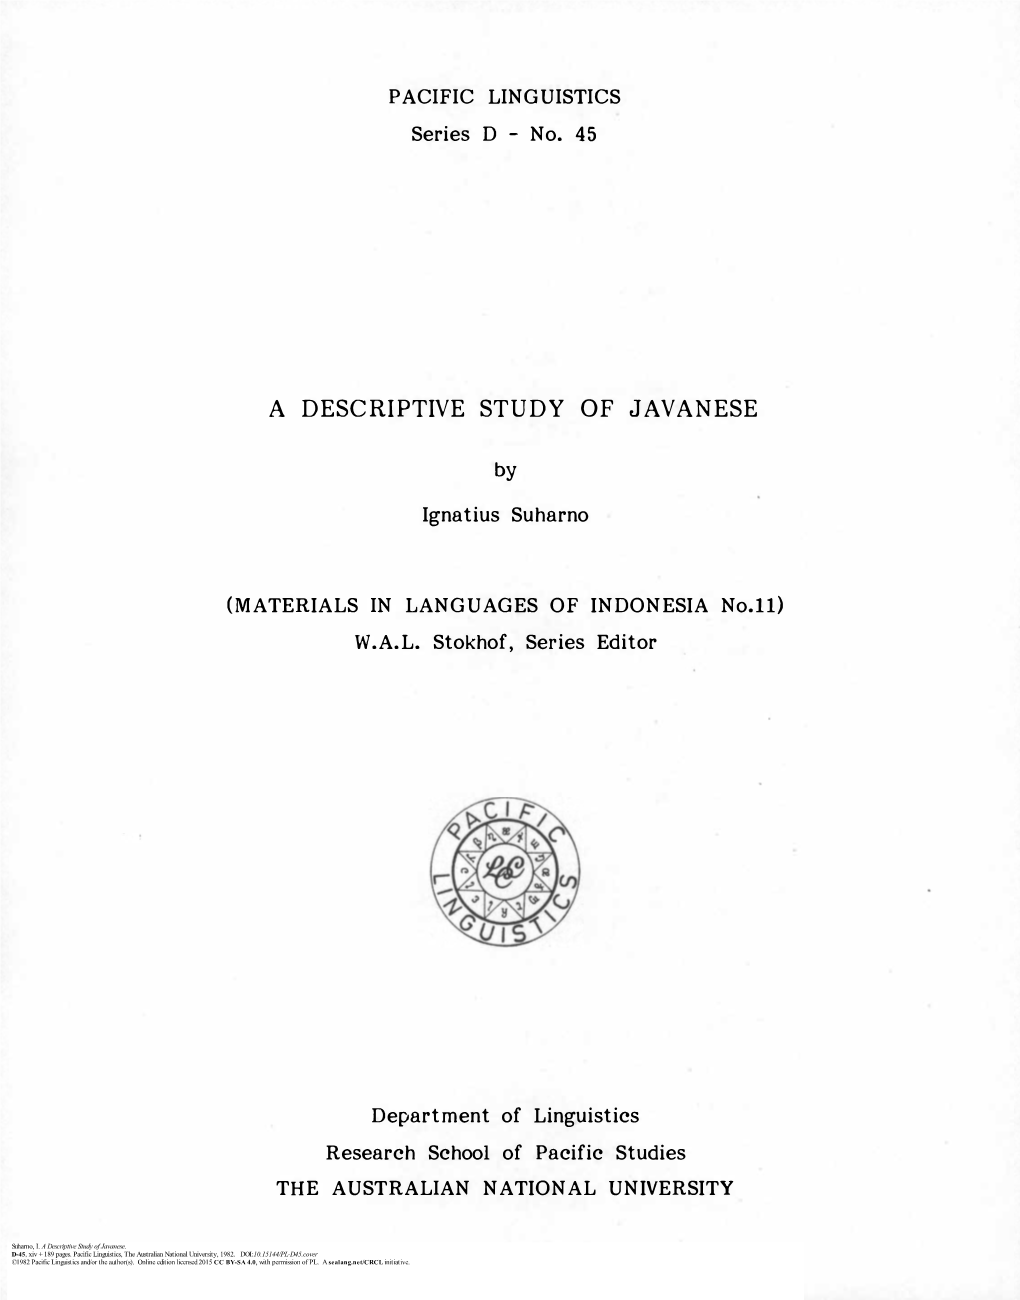 A Descriptive Study of Javanese